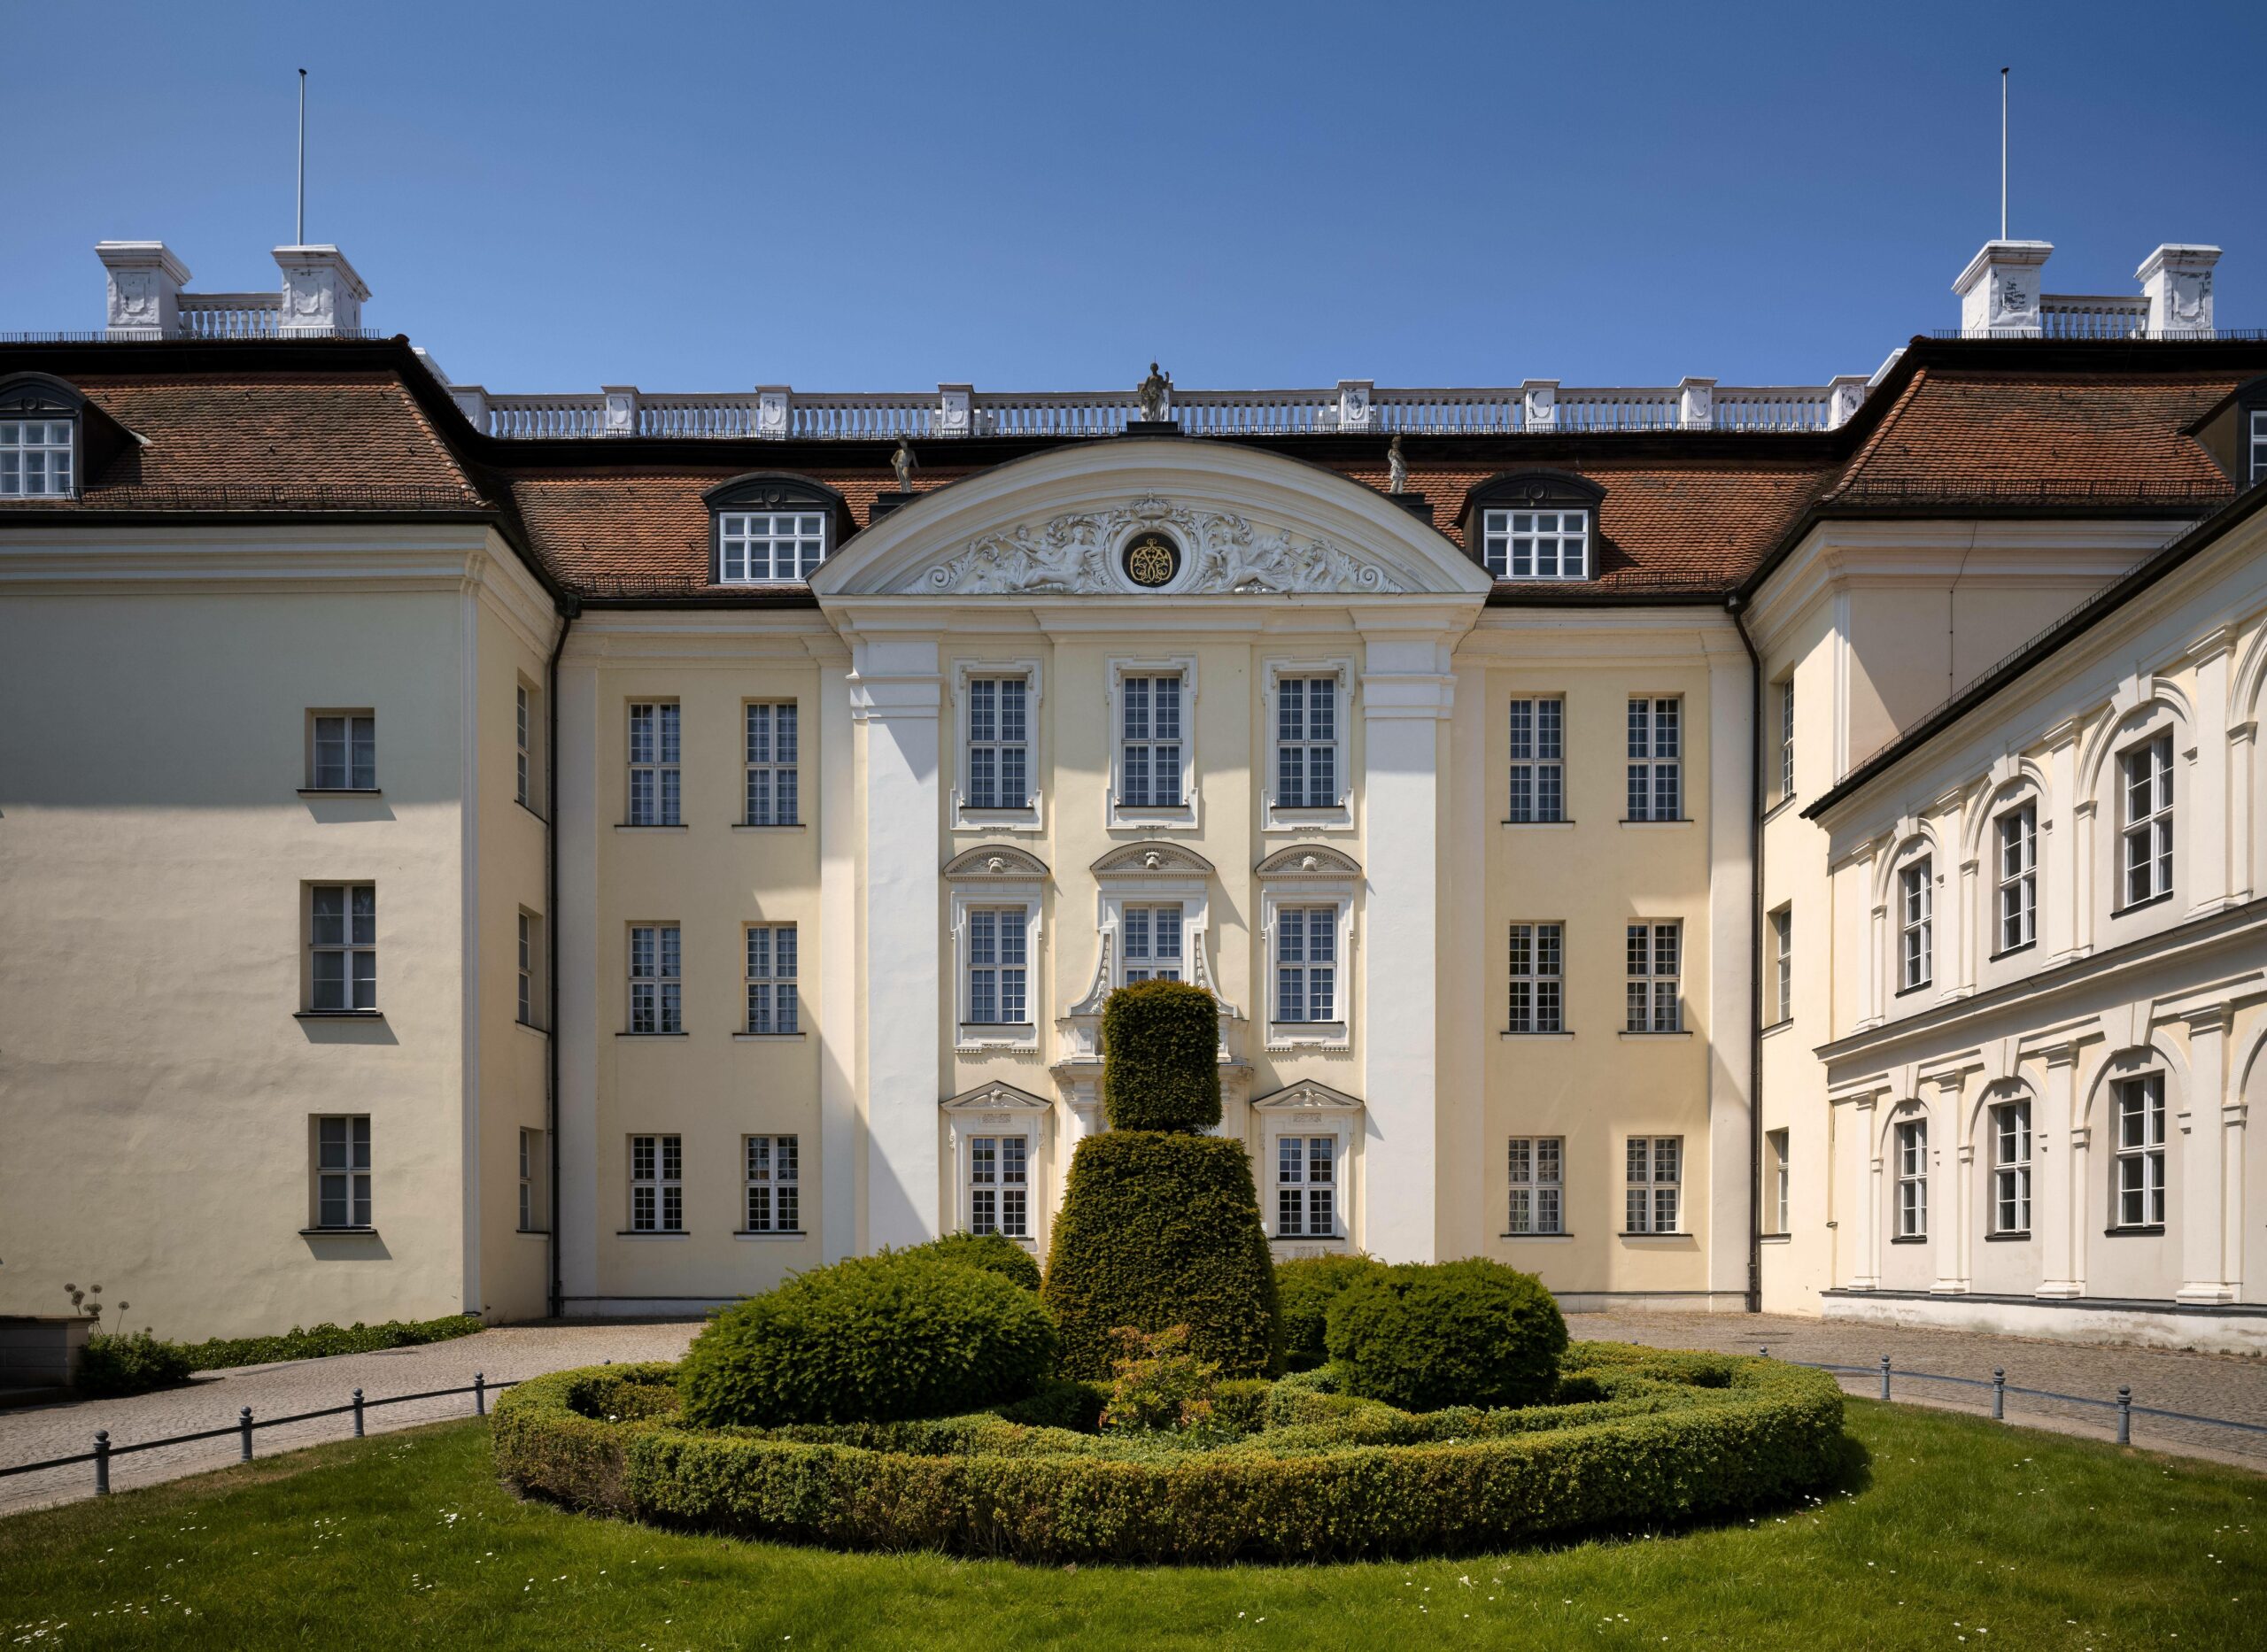 Eines der berühmtesten Schlösser in Berlin ist das Schloss Köpenick. Foto: Imago/Imagebroker/Michael Weber